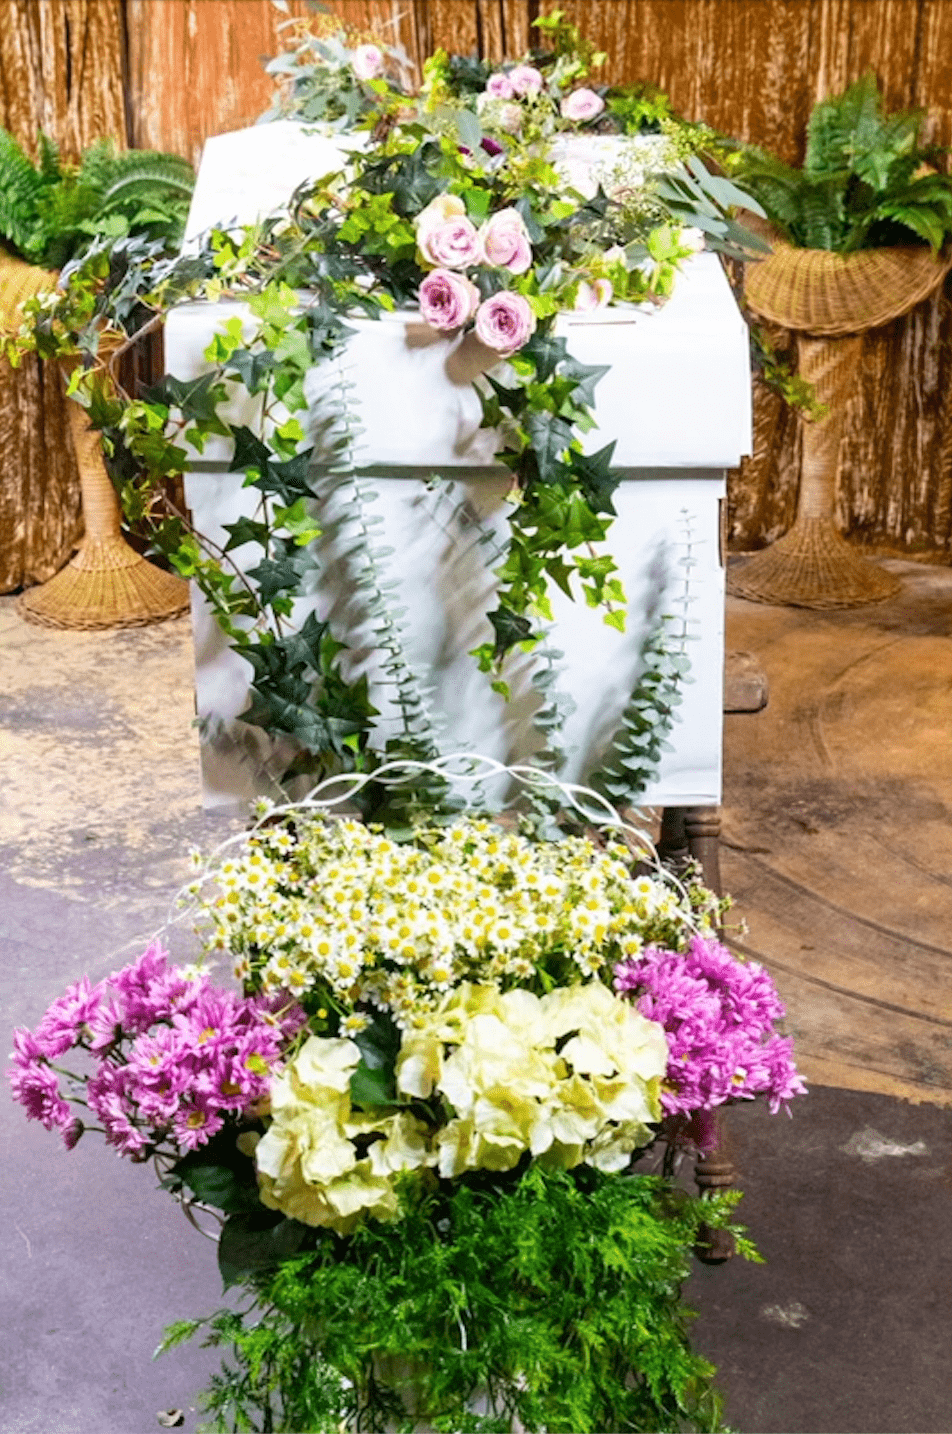 Customer Image 1 of Cardboard Coffin